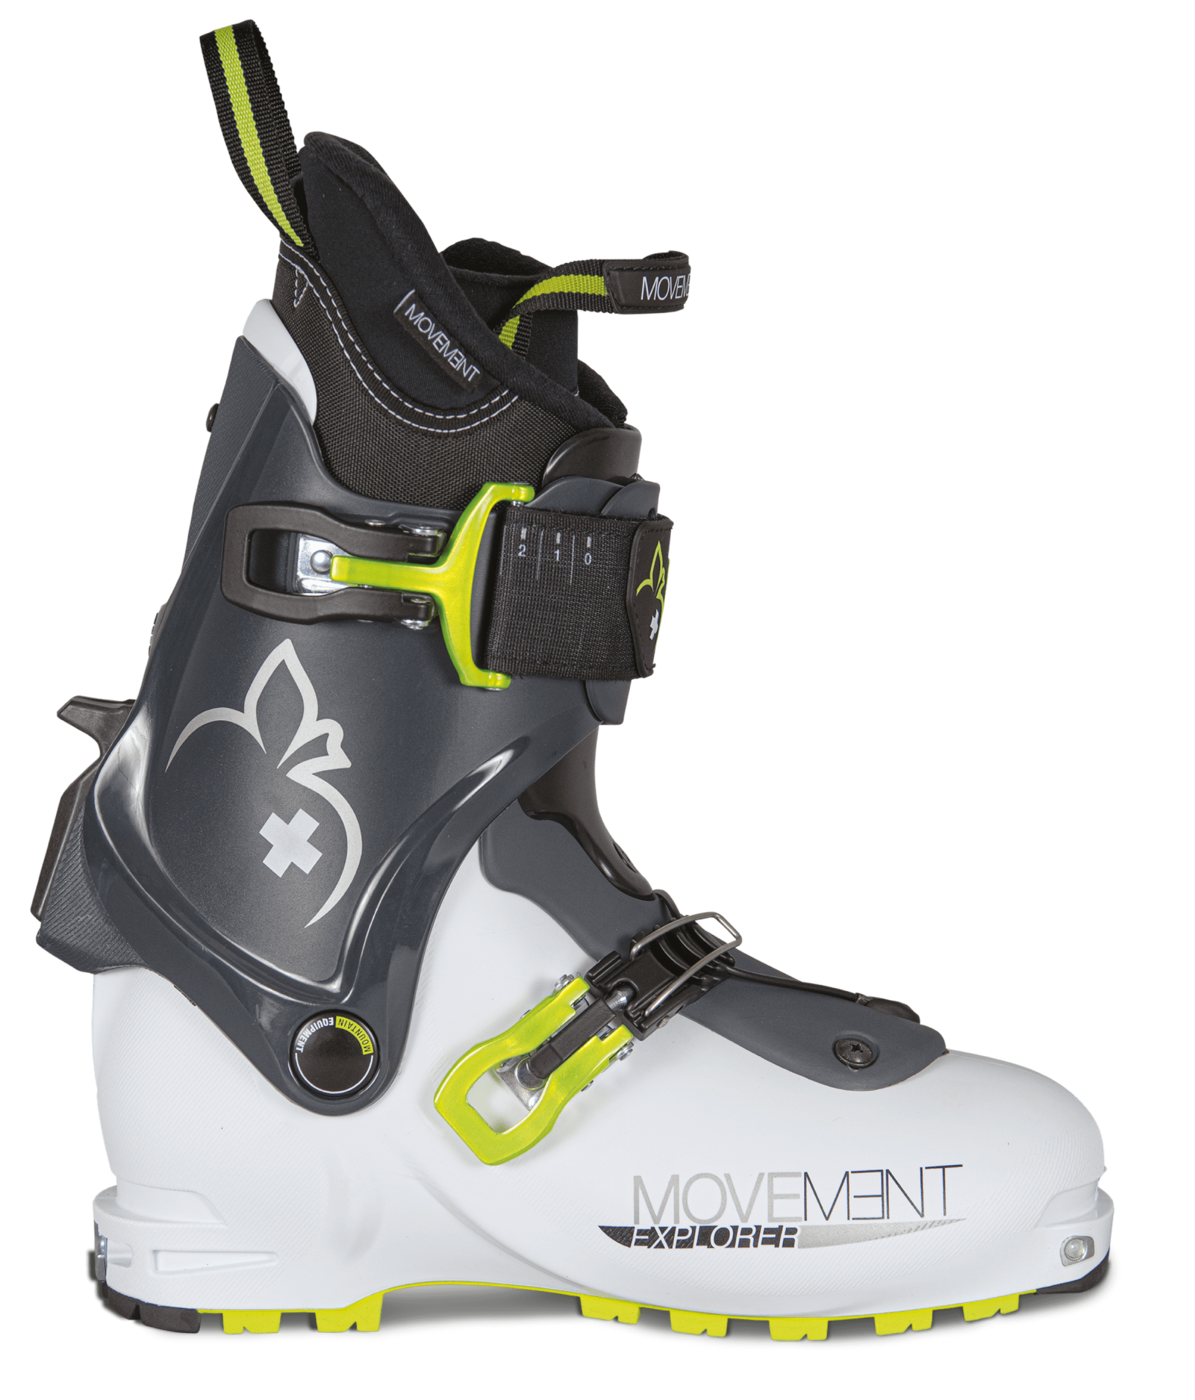 Movement Explorer Boots  21